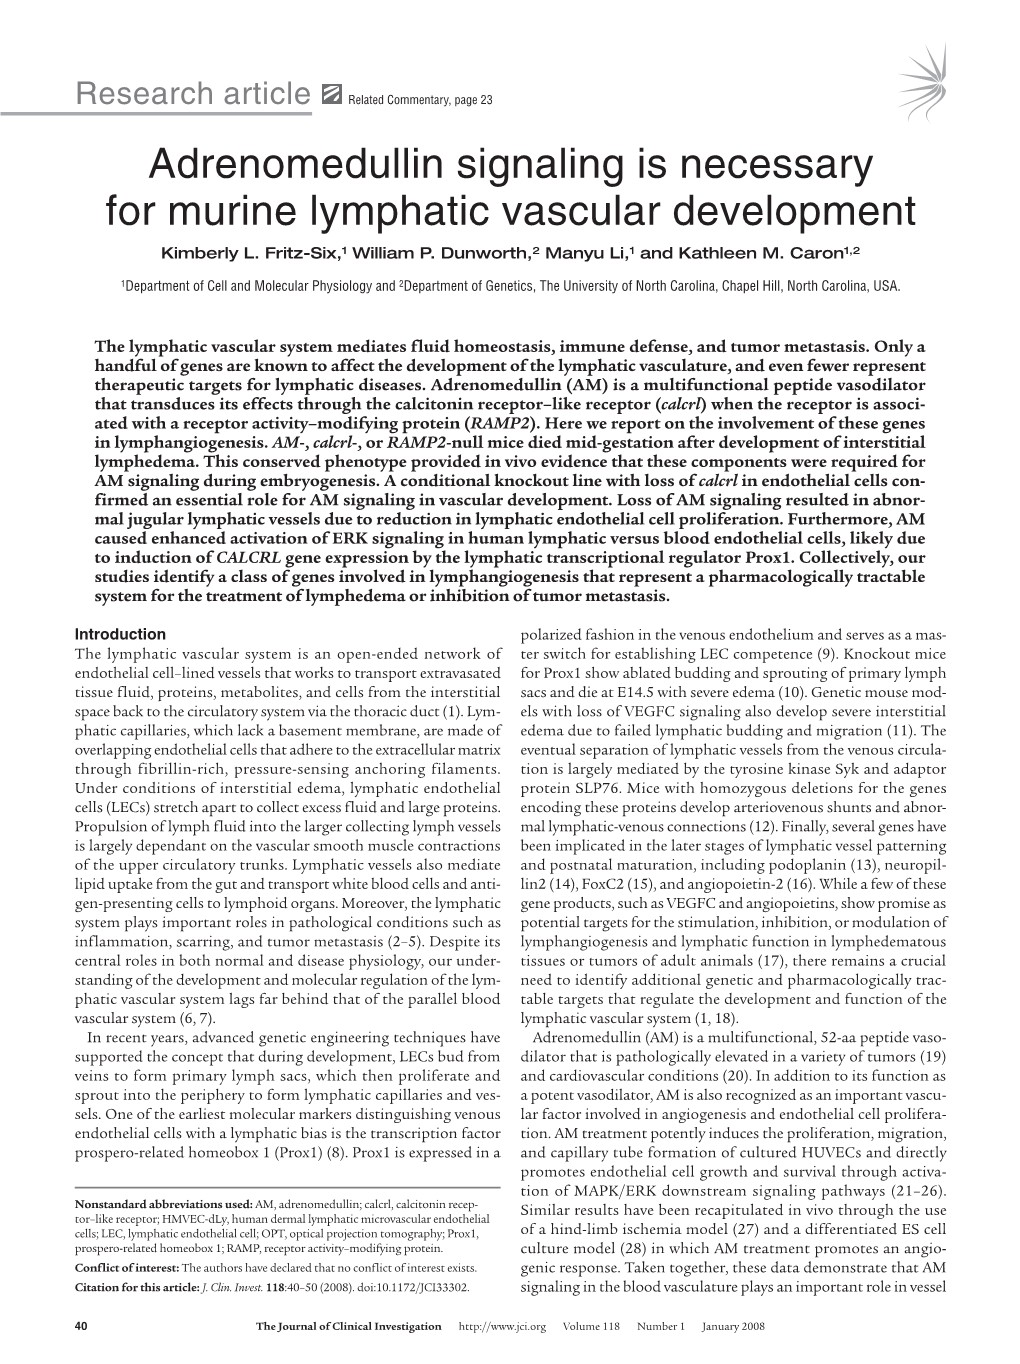 Adrenomedullin Signaling Is Necessary for Murine Lymphatic Vascular Development Kimberly L